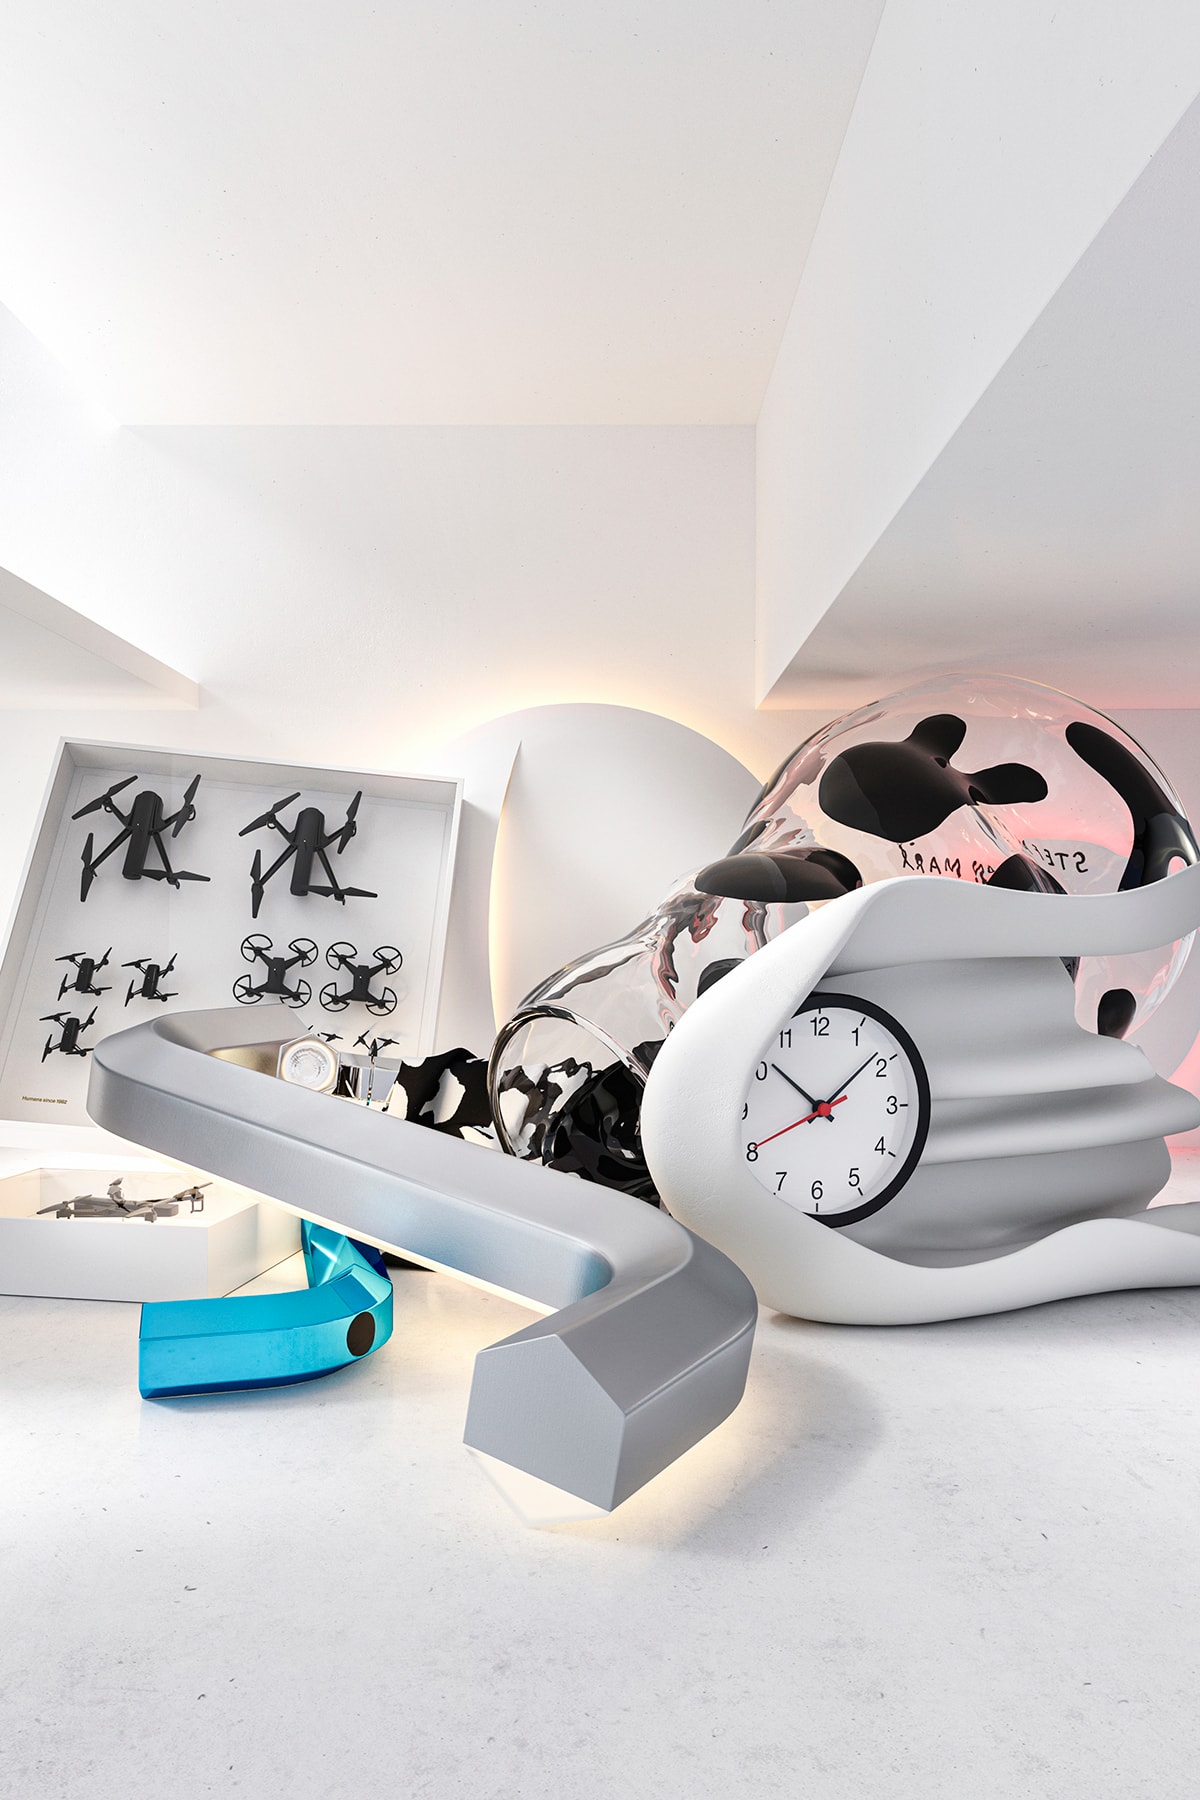 IKEA Daniel Arsham Sabine Marcelis Gelchop Clock Lamp Home Objects Furniture Art Event Collection 2021